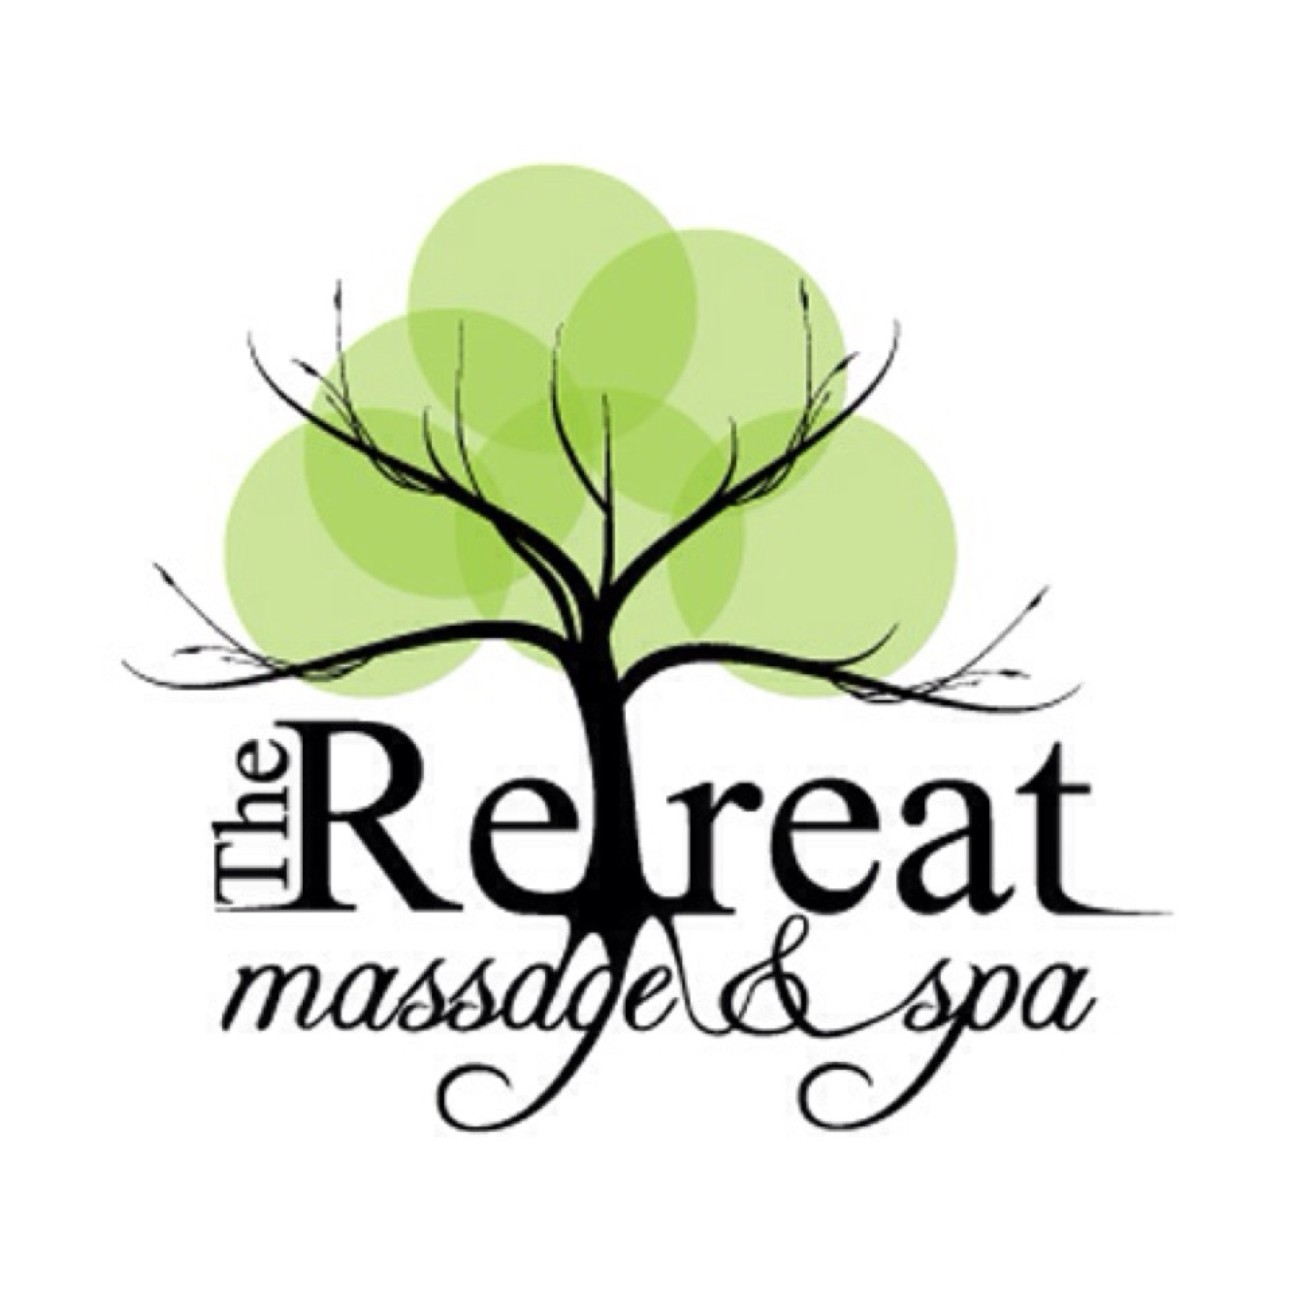 The Retreat Massage & Spa